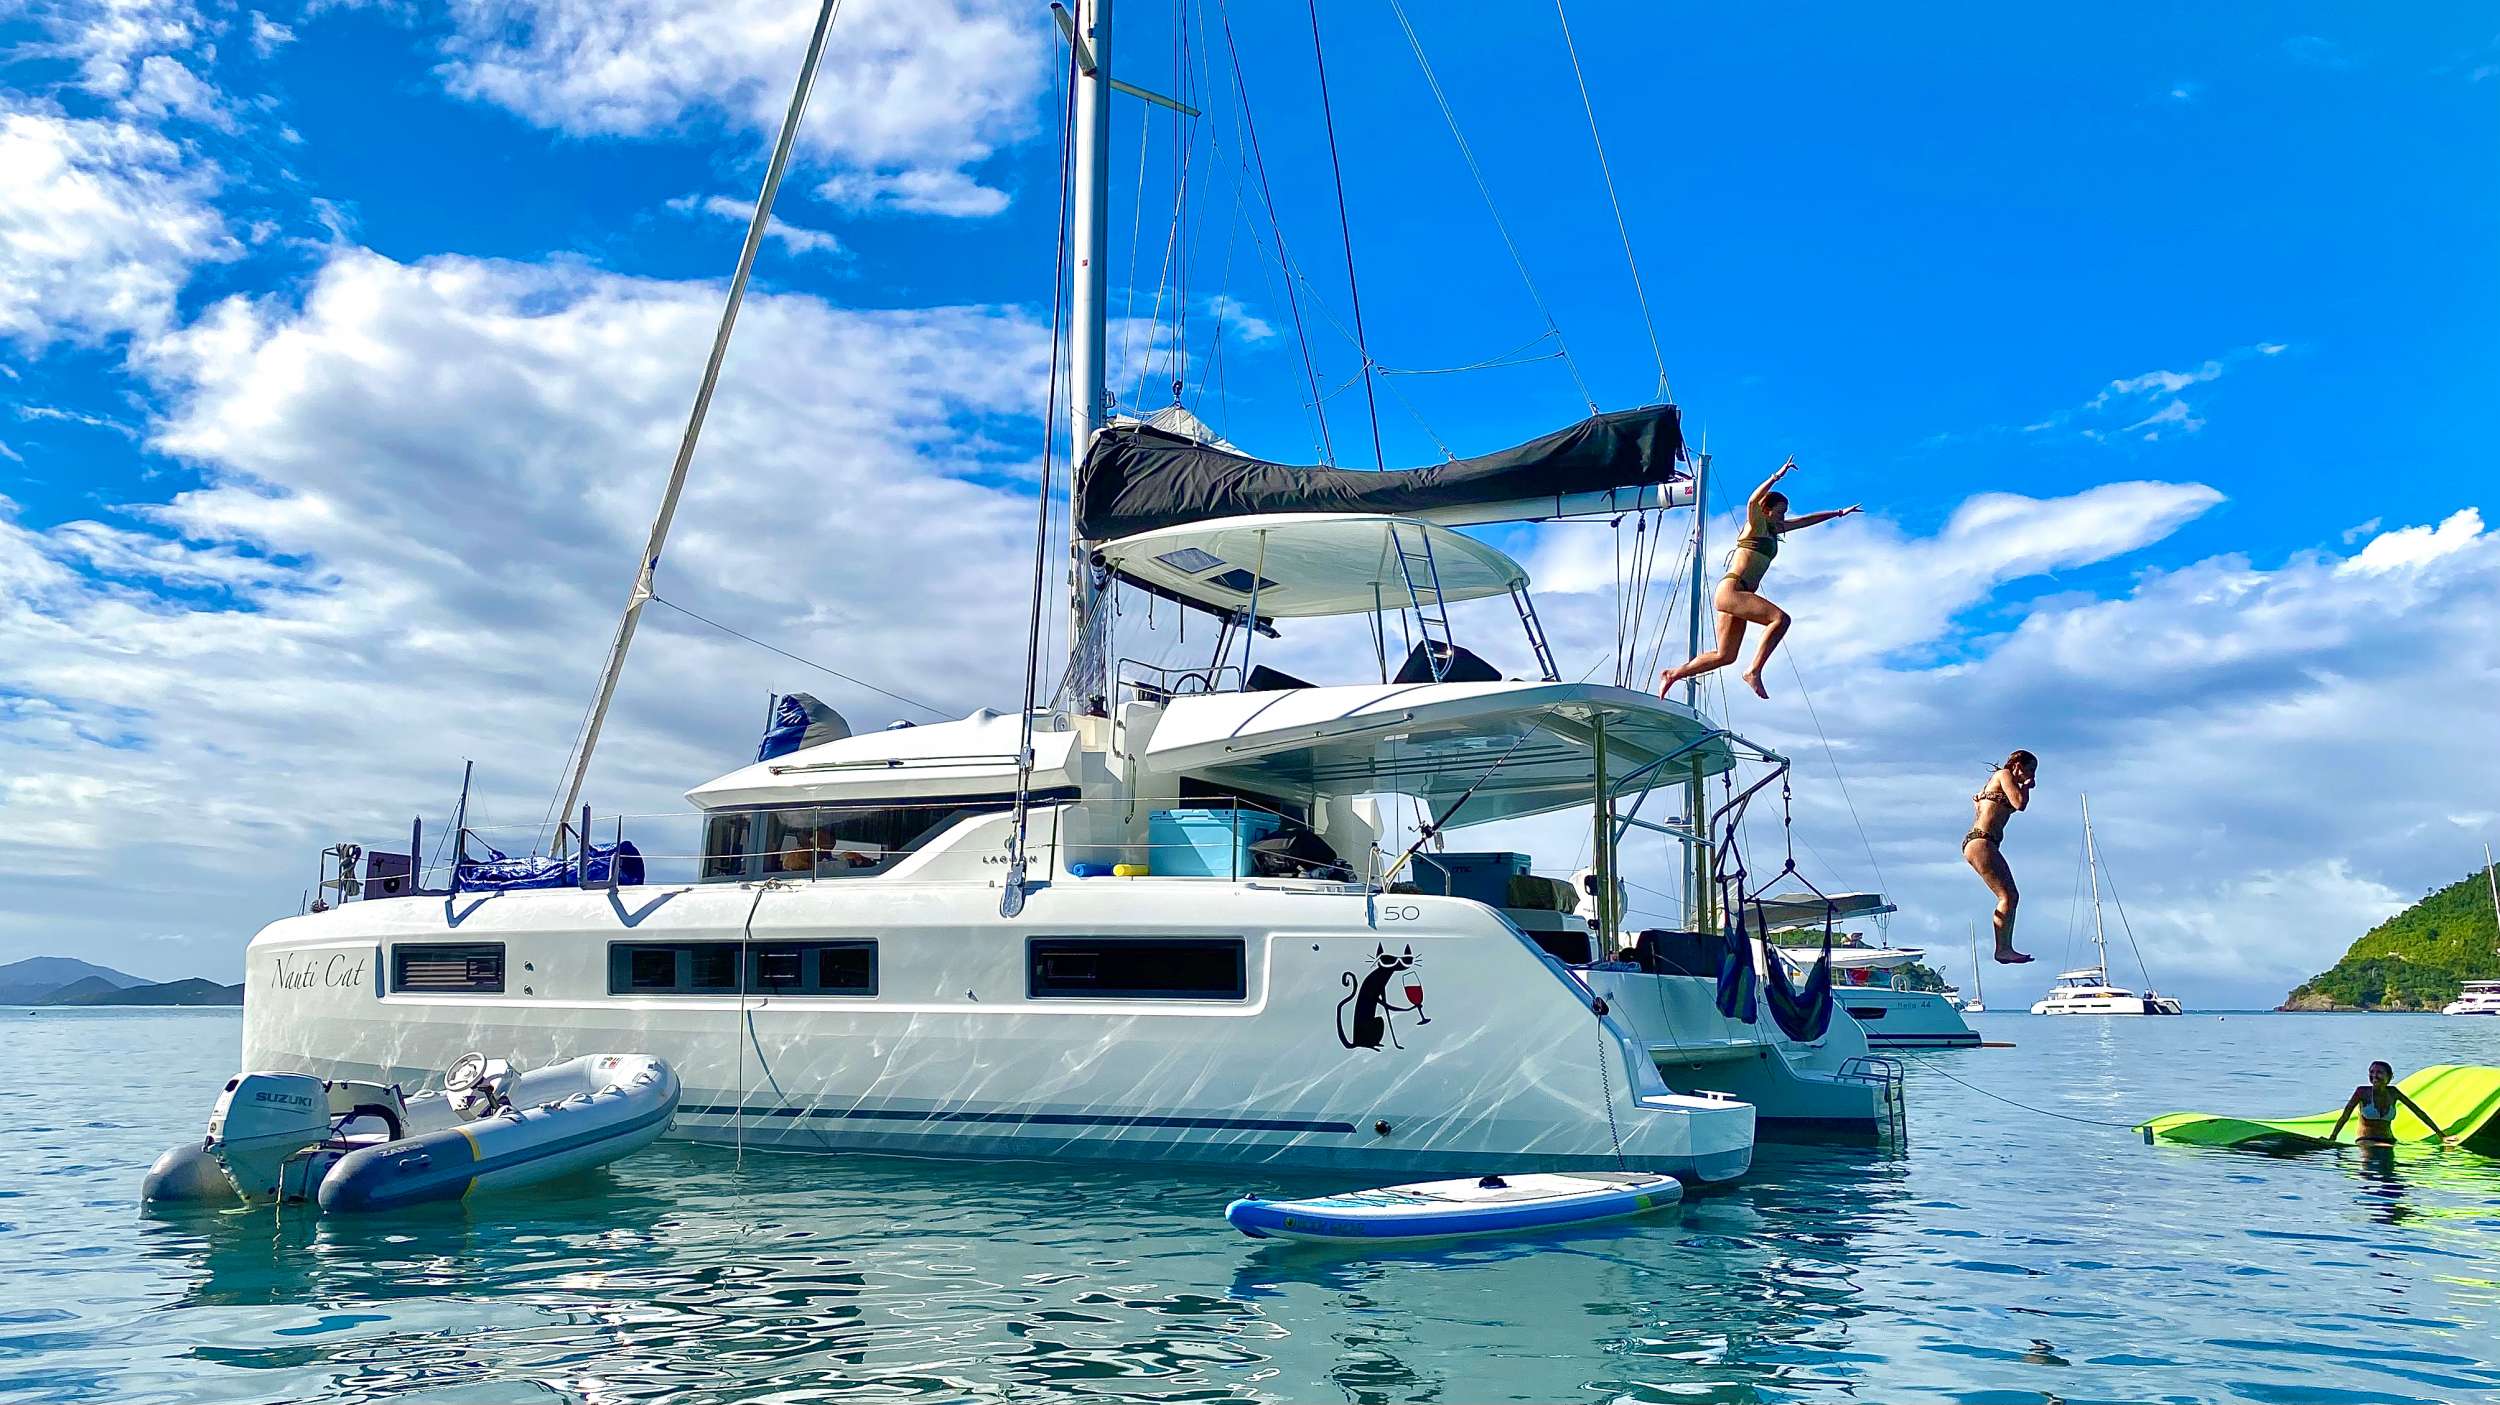 NAUTI CAT - Location de Bateaux aux Bahamas & Boat hire in Bahamas 1